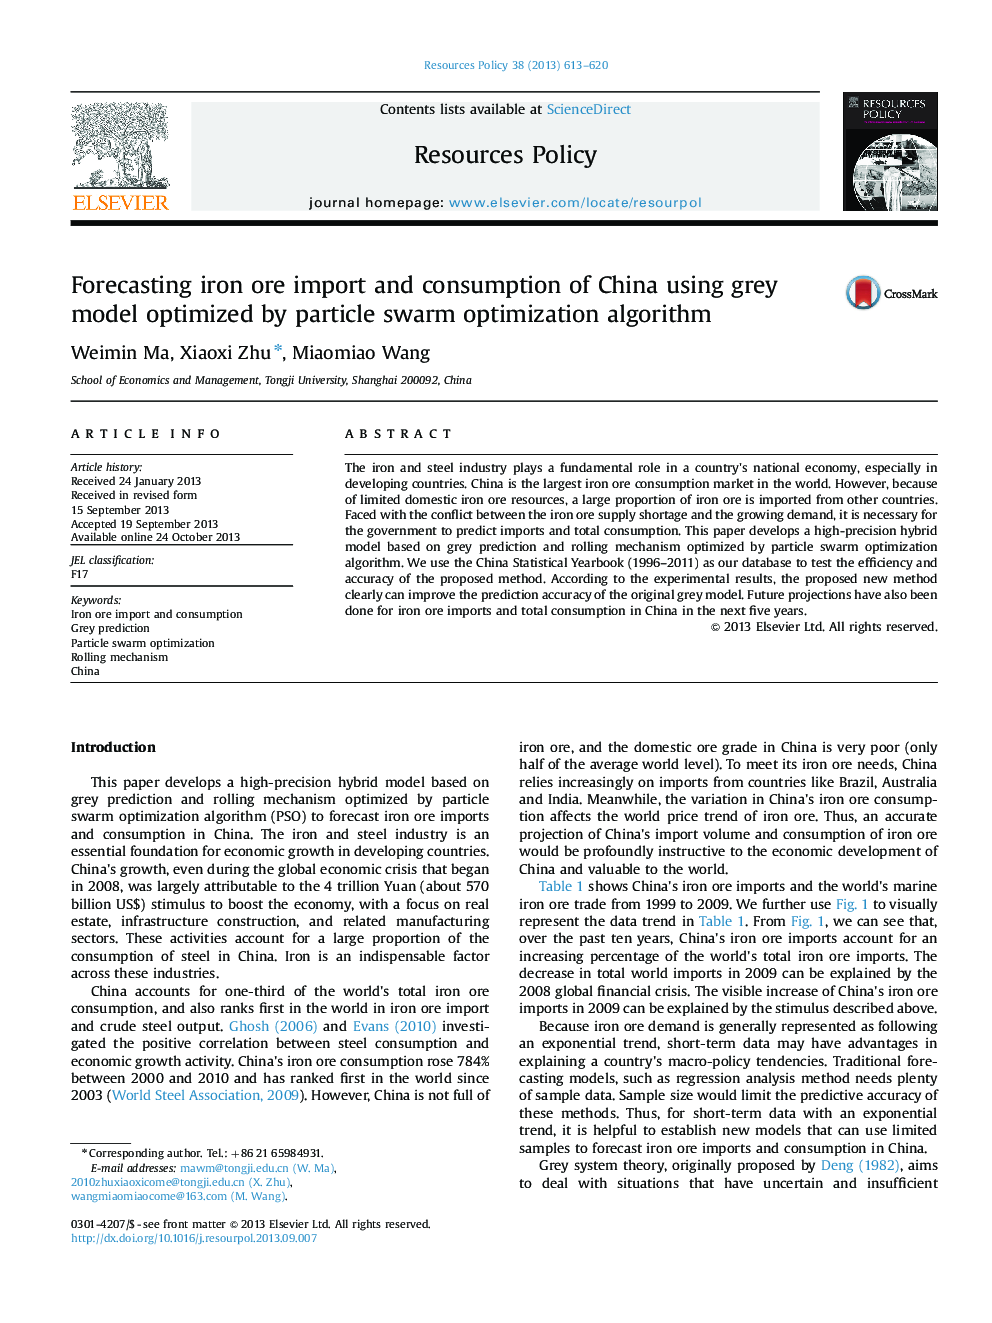 Forecasting iron ore import and consumption of China using grey model optimized by particle swarm optimization algorithm